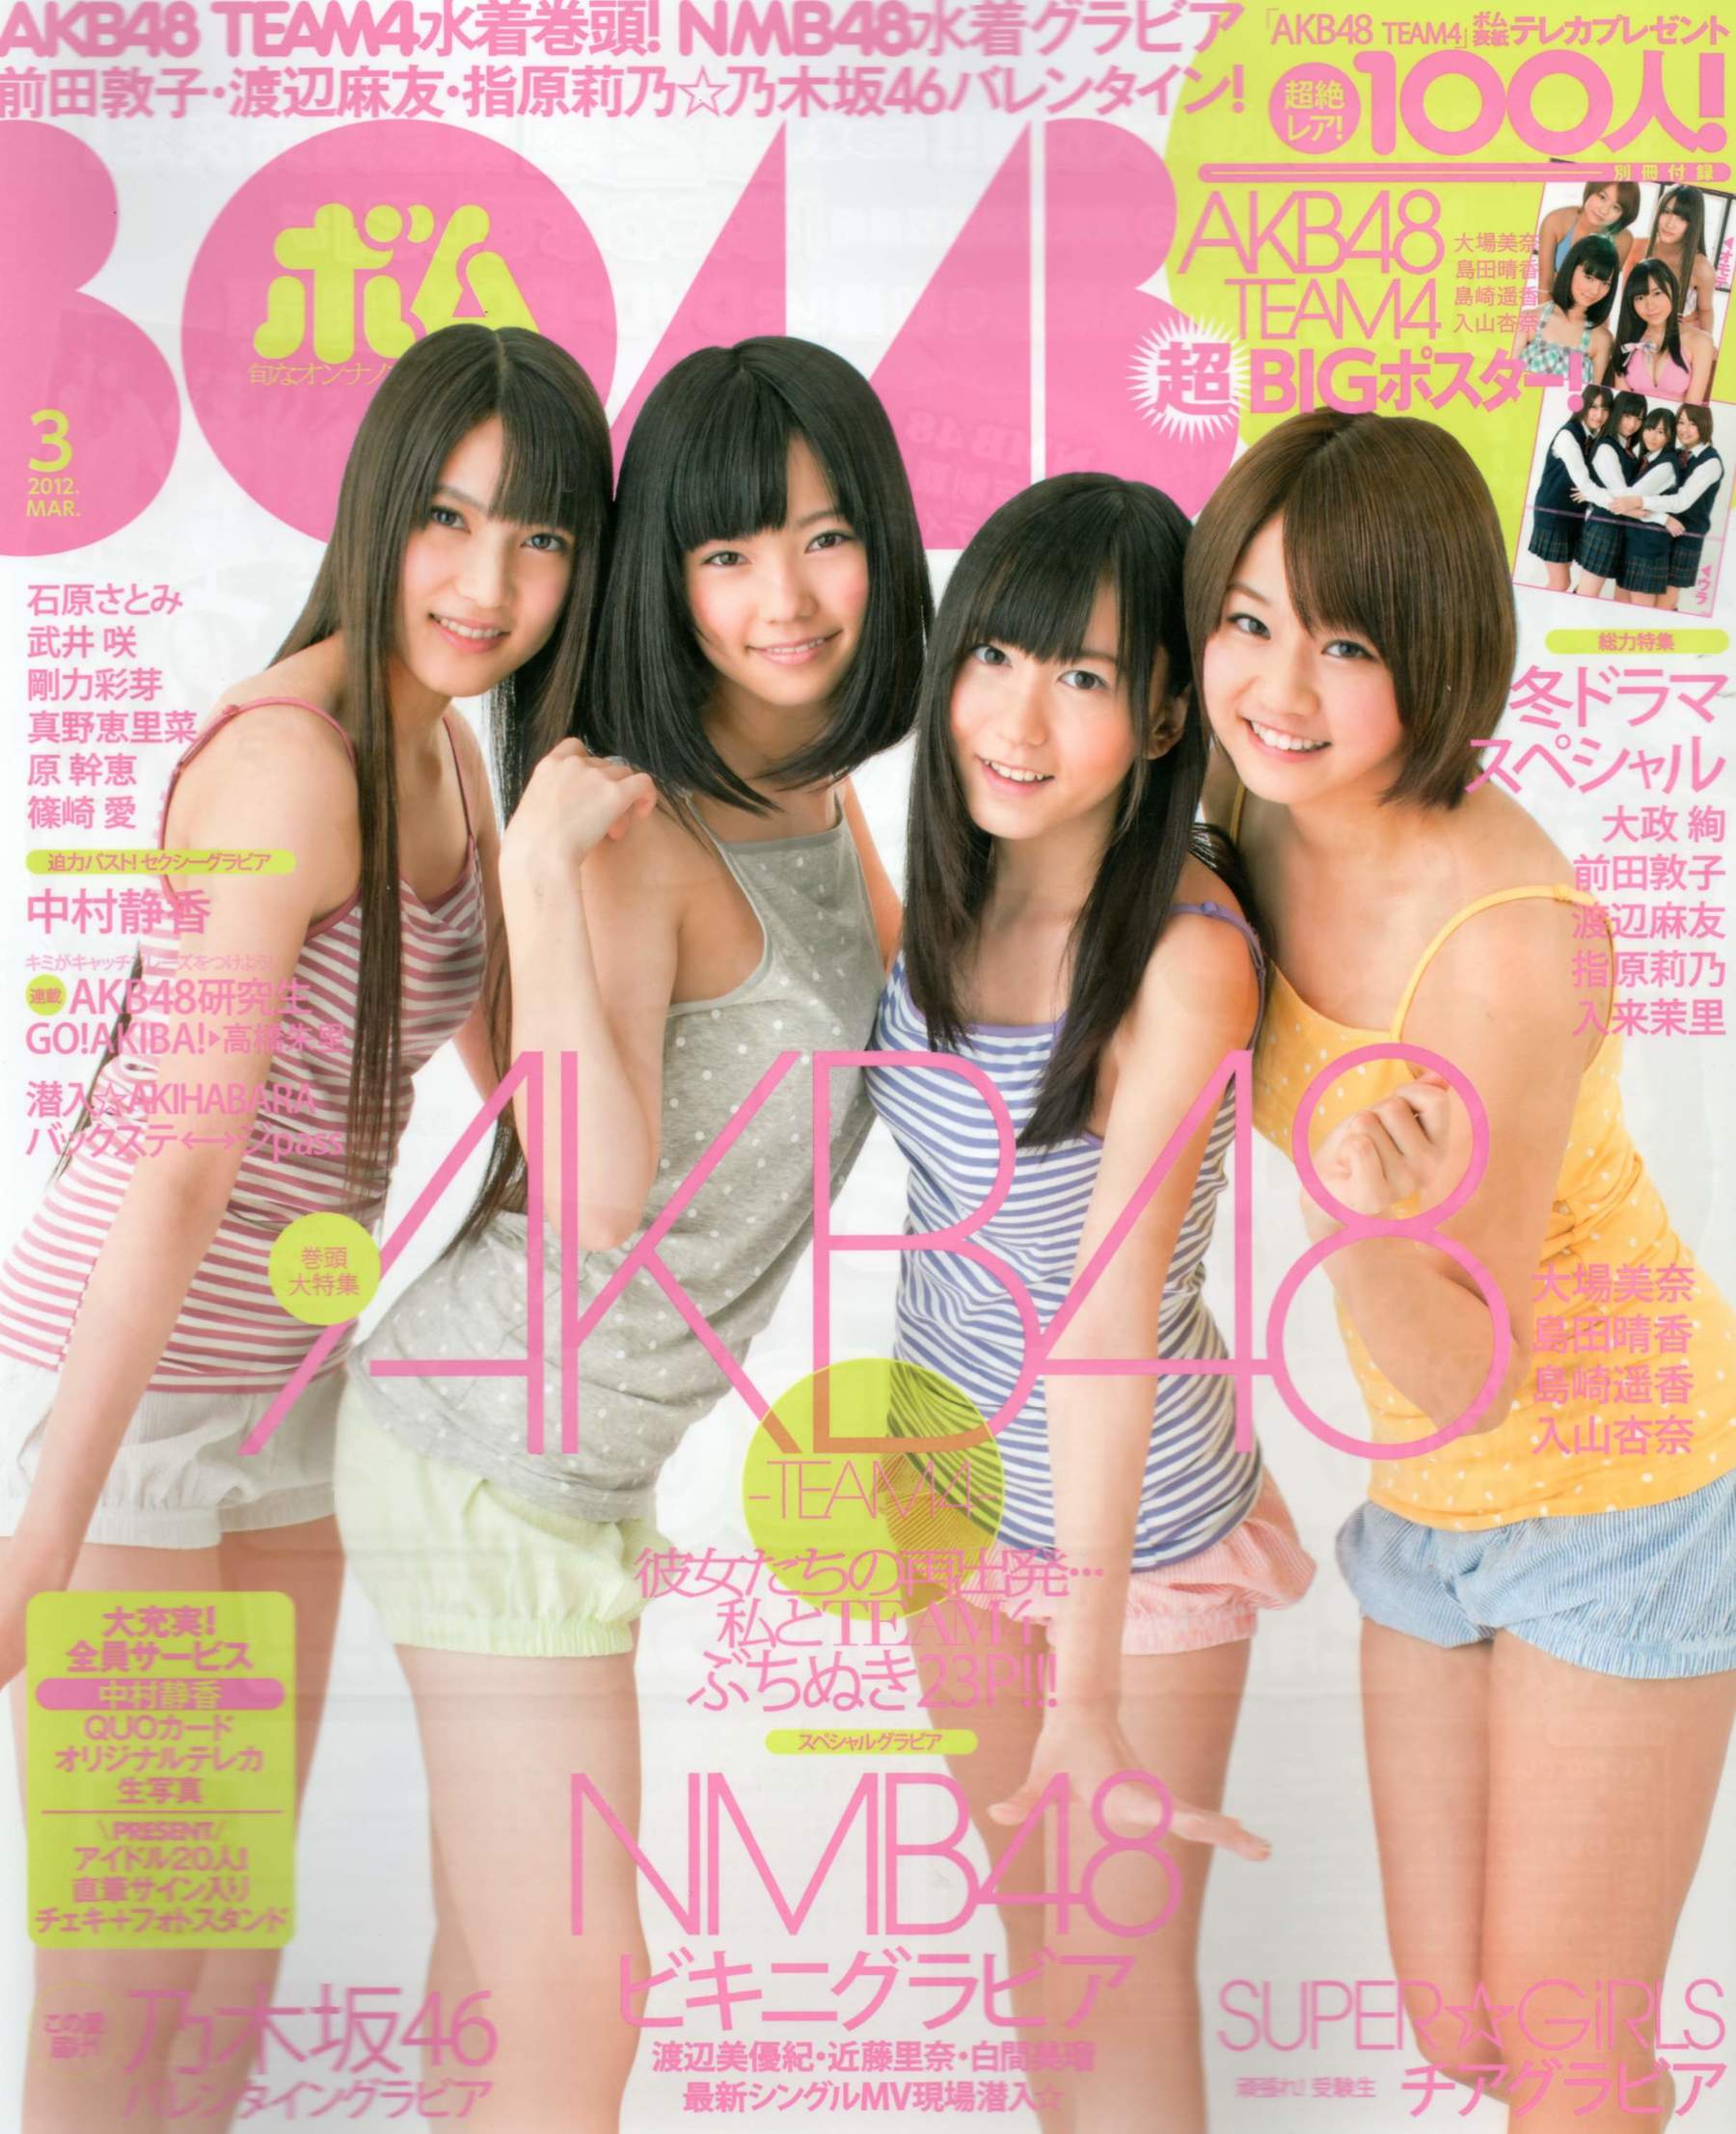 [Bomb Magazine] 2012年No.03 AKB48(Team4) NMB48 前田敦子 渡邊麻友 SUPER☆GiRLS 石原里美 剛力彩芽 篠崎愛1